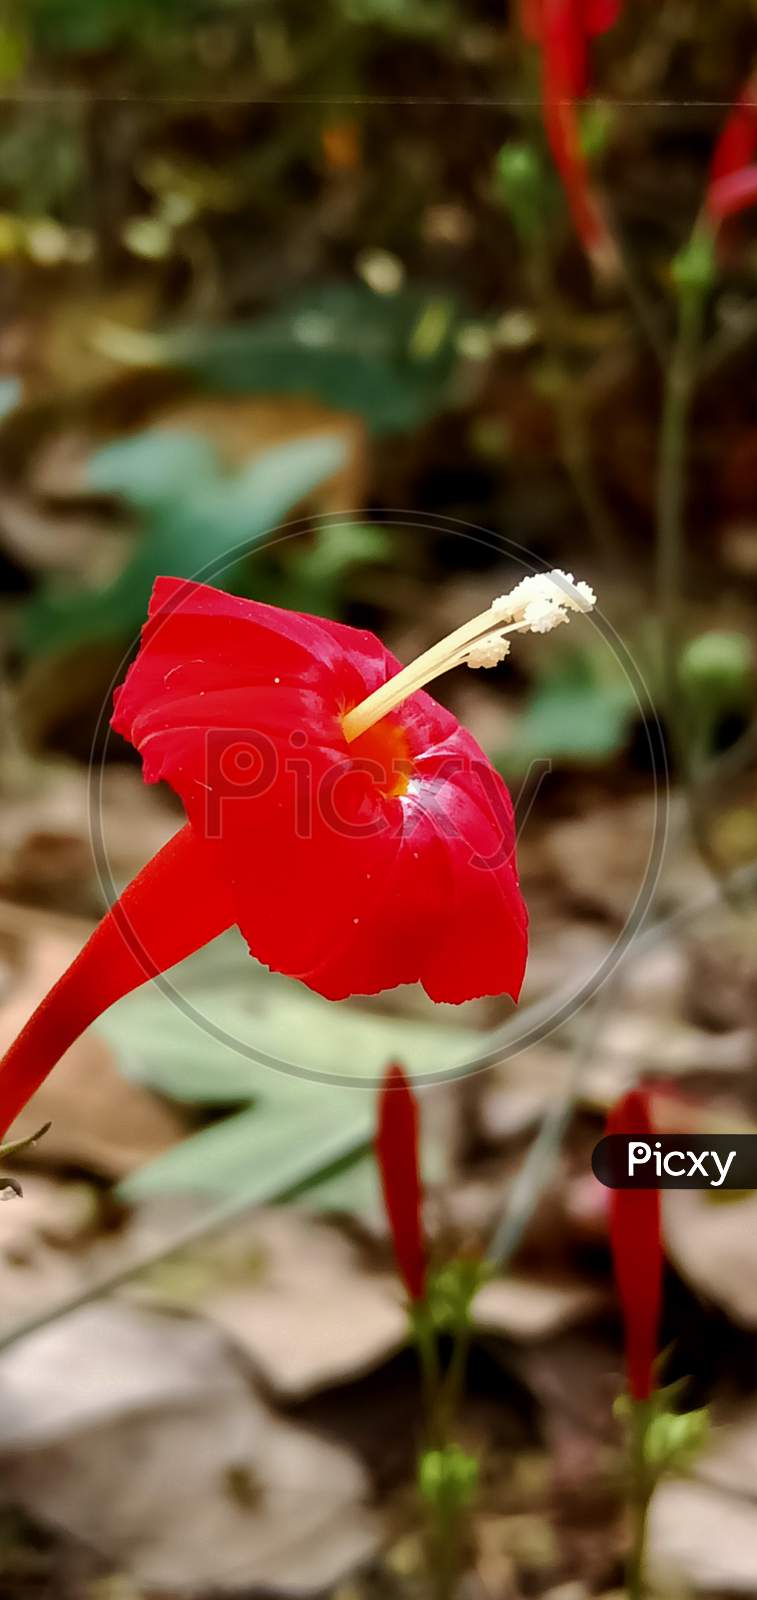 Scarlet Morning Glory, Morning Glory, Hummingbird Plant)  Convolvulaceae